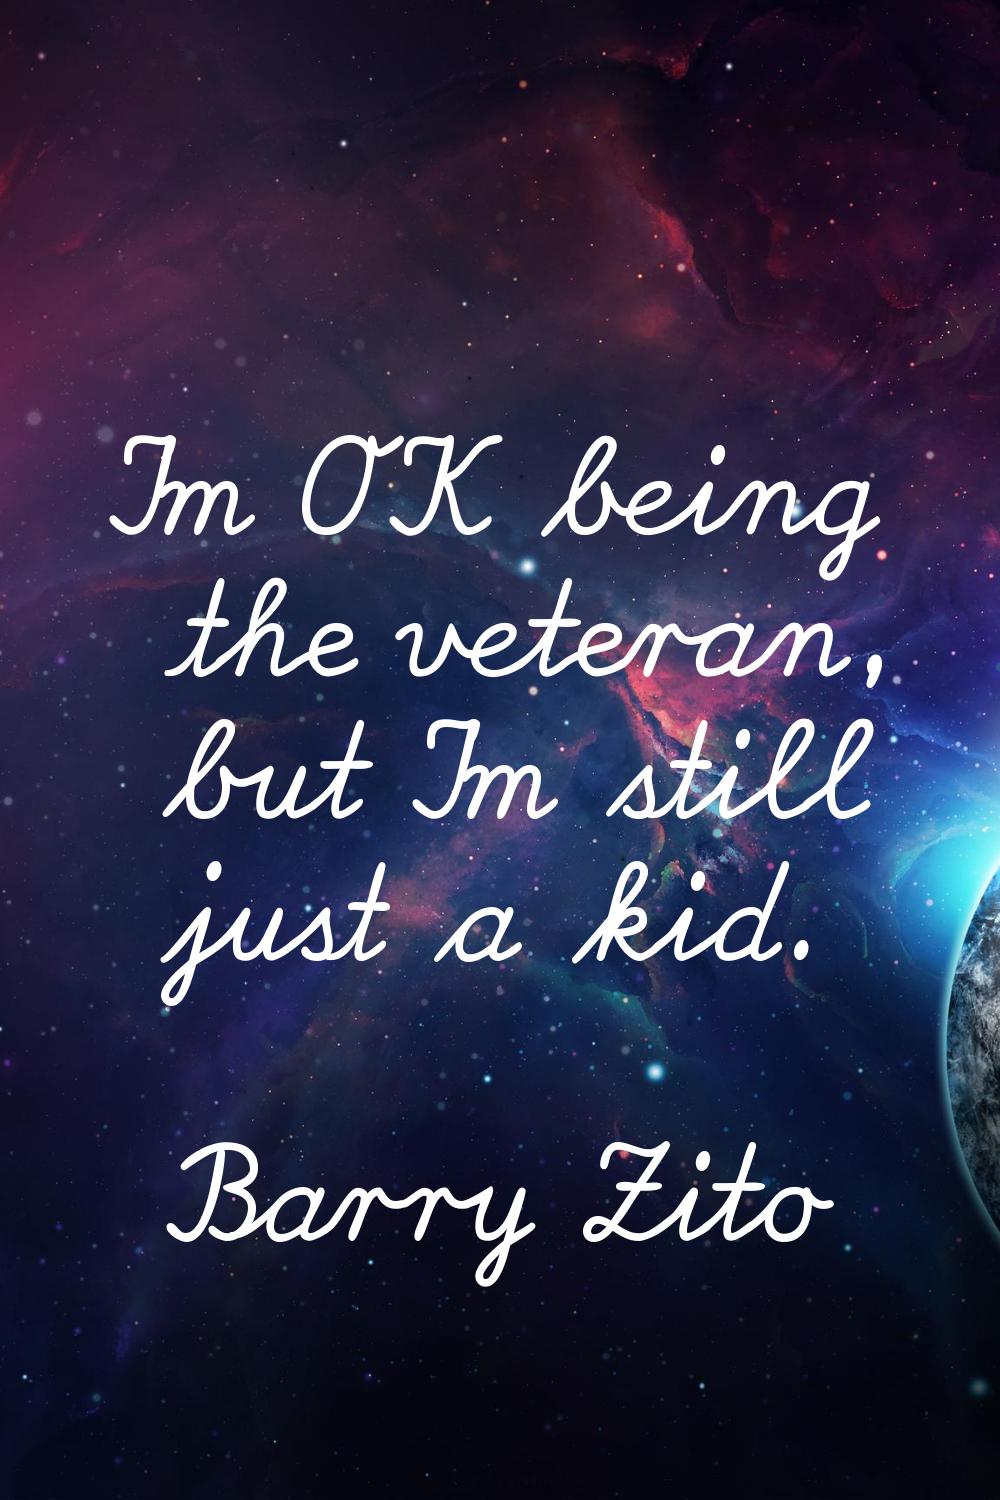 I'm OK being the veteran, but I'm still just a kid.